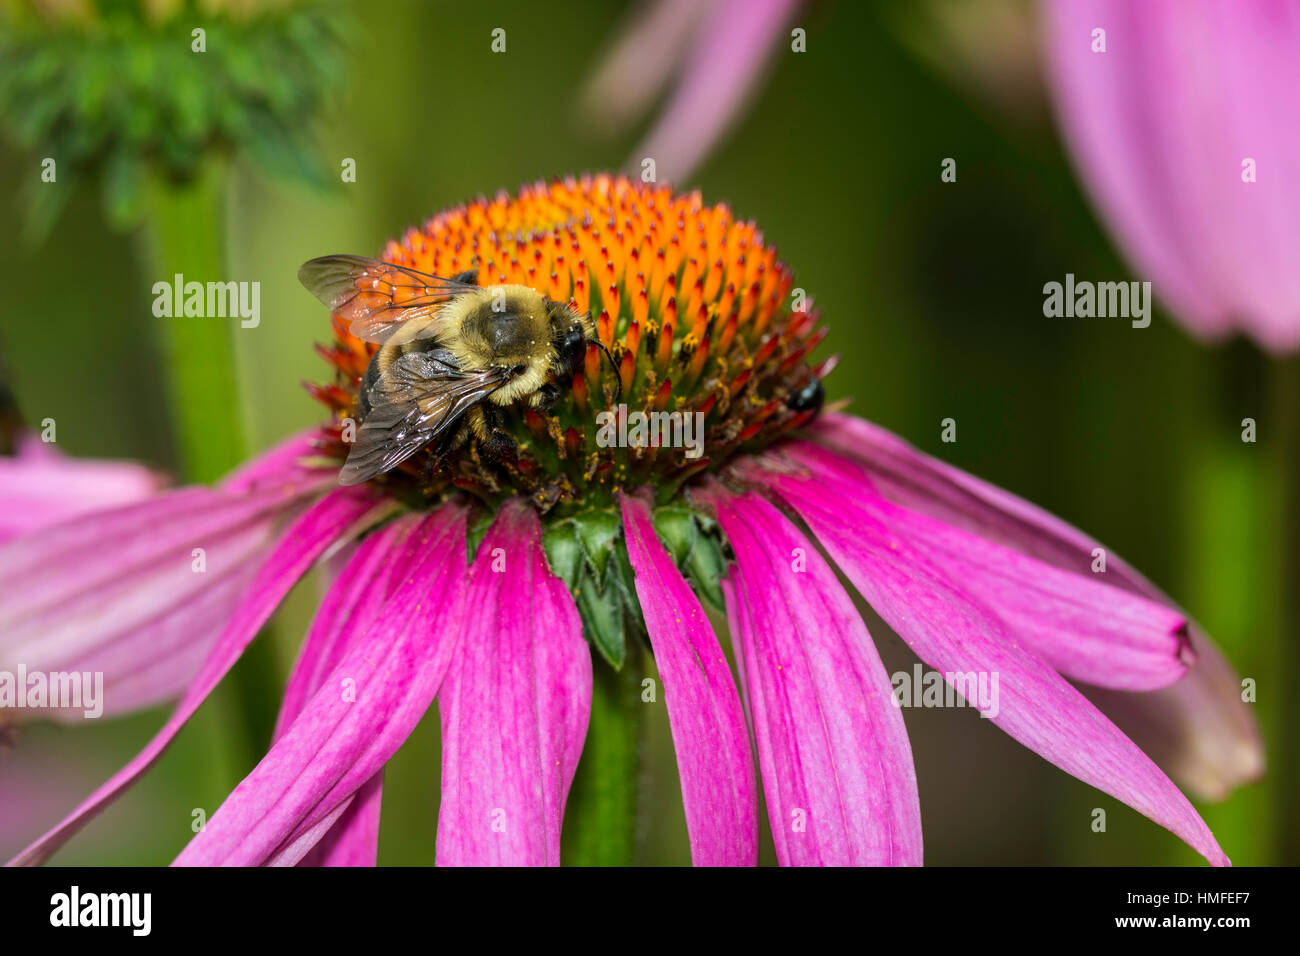 Eastern Carpenter Bee gathering pollen on a Purple Coneflwoer Stock ...